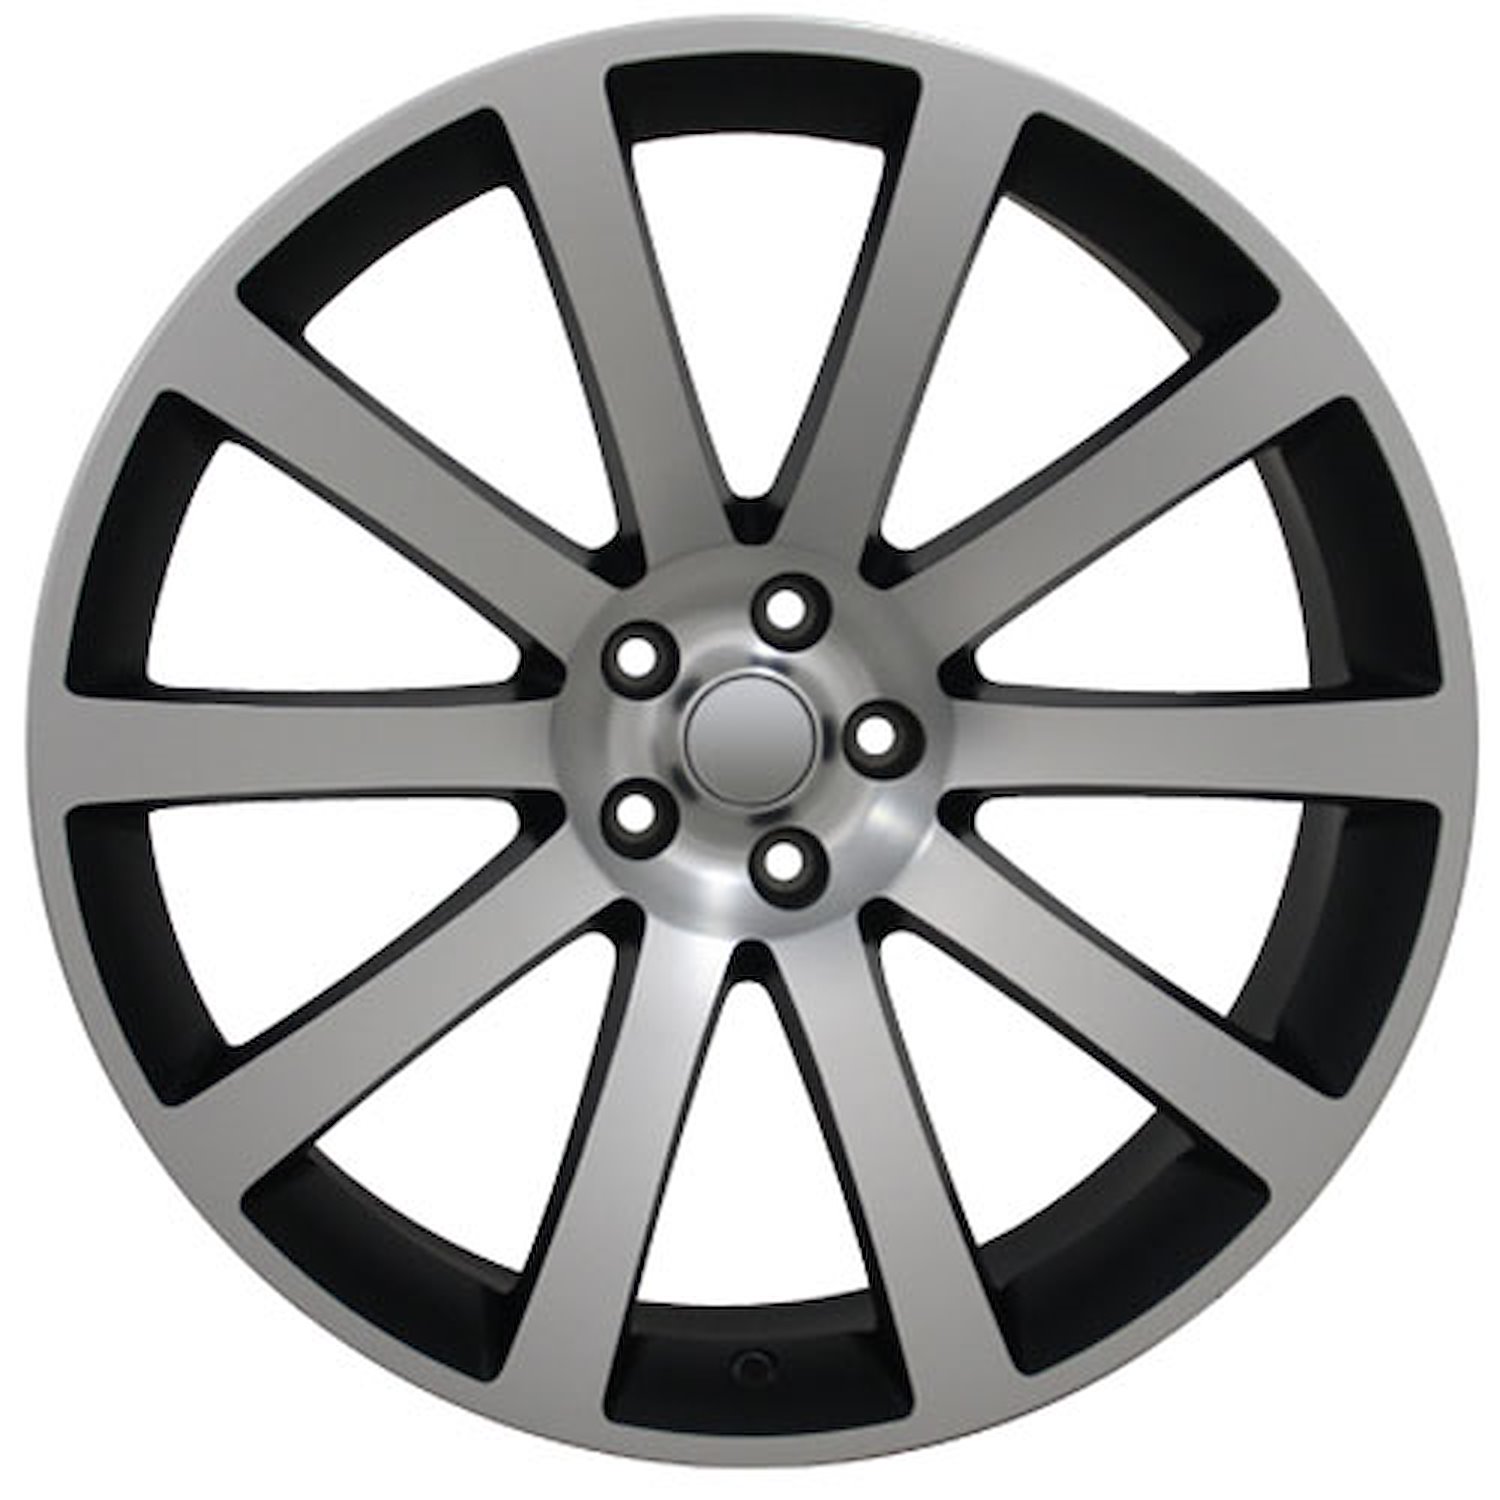 Chrysler 300 SRT Style Wheel Size: 22" x 9"